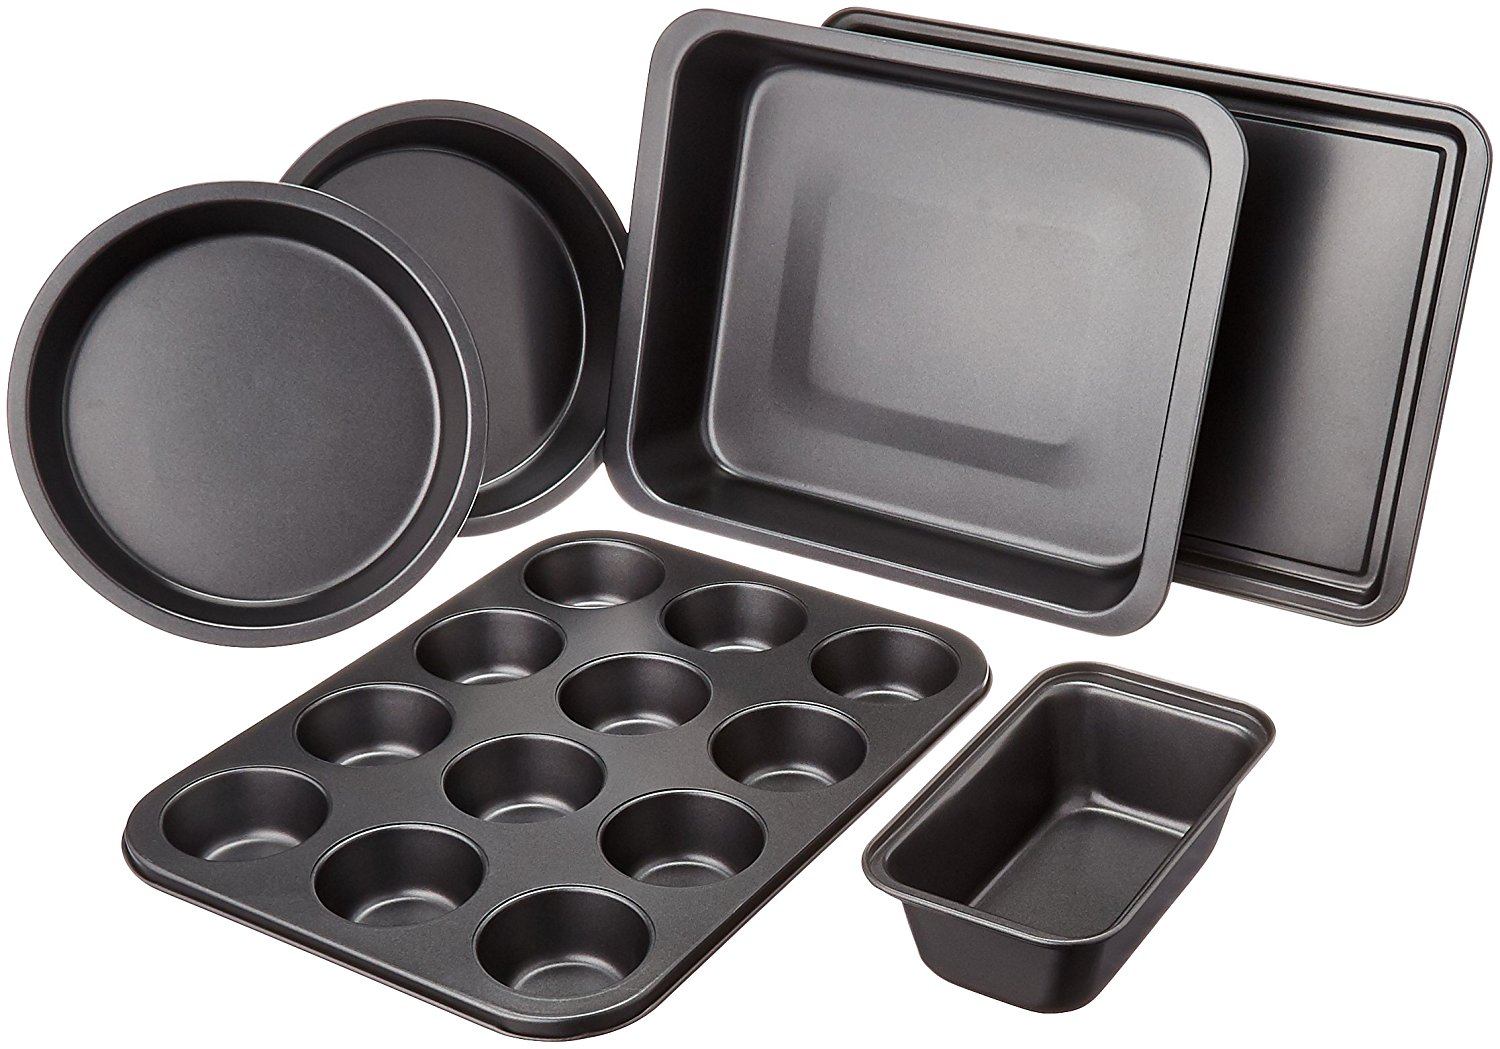 AmazonBasics 6-Piece Bakeware Set – Just $18.40!